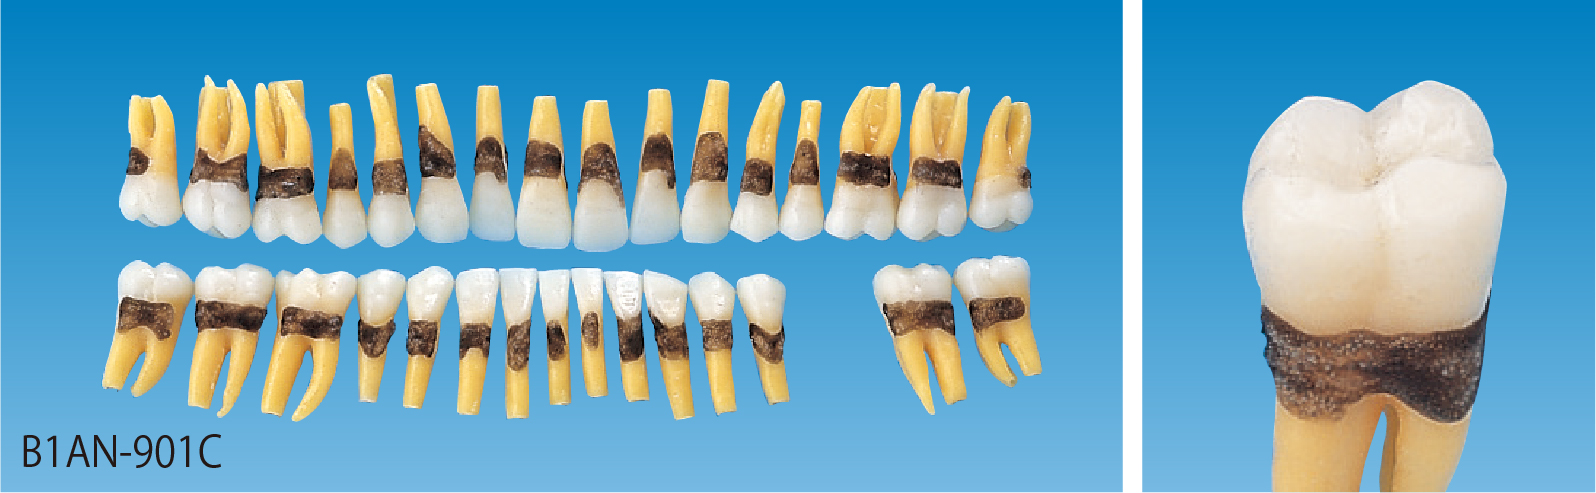 解剖学的模型歯(歯石付き) [B1AN-901C]